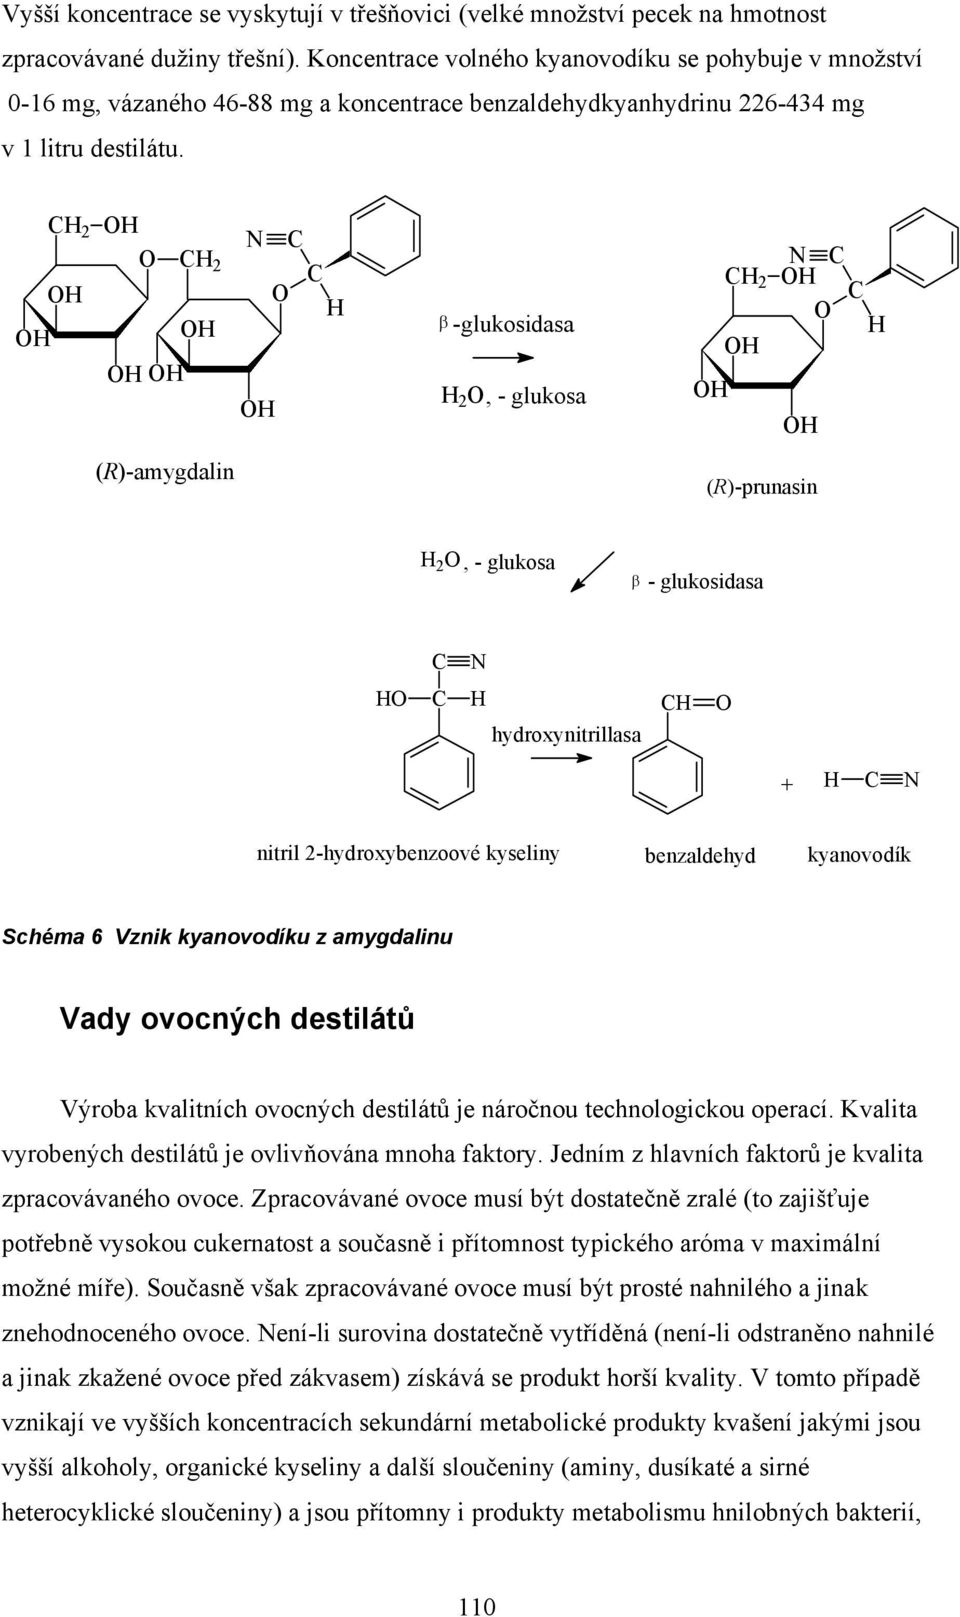 2 2 N β -glukosidasa 2, - glukosa 2 N (R)-amygdalin (R)-prunasin 2, - glukosa β - glukosidasa N hydroxynitrillasa + N nitril 2-hydroxybenzoové kyseliny benzaldehyd kyanovodík Schéma 6 Vznik